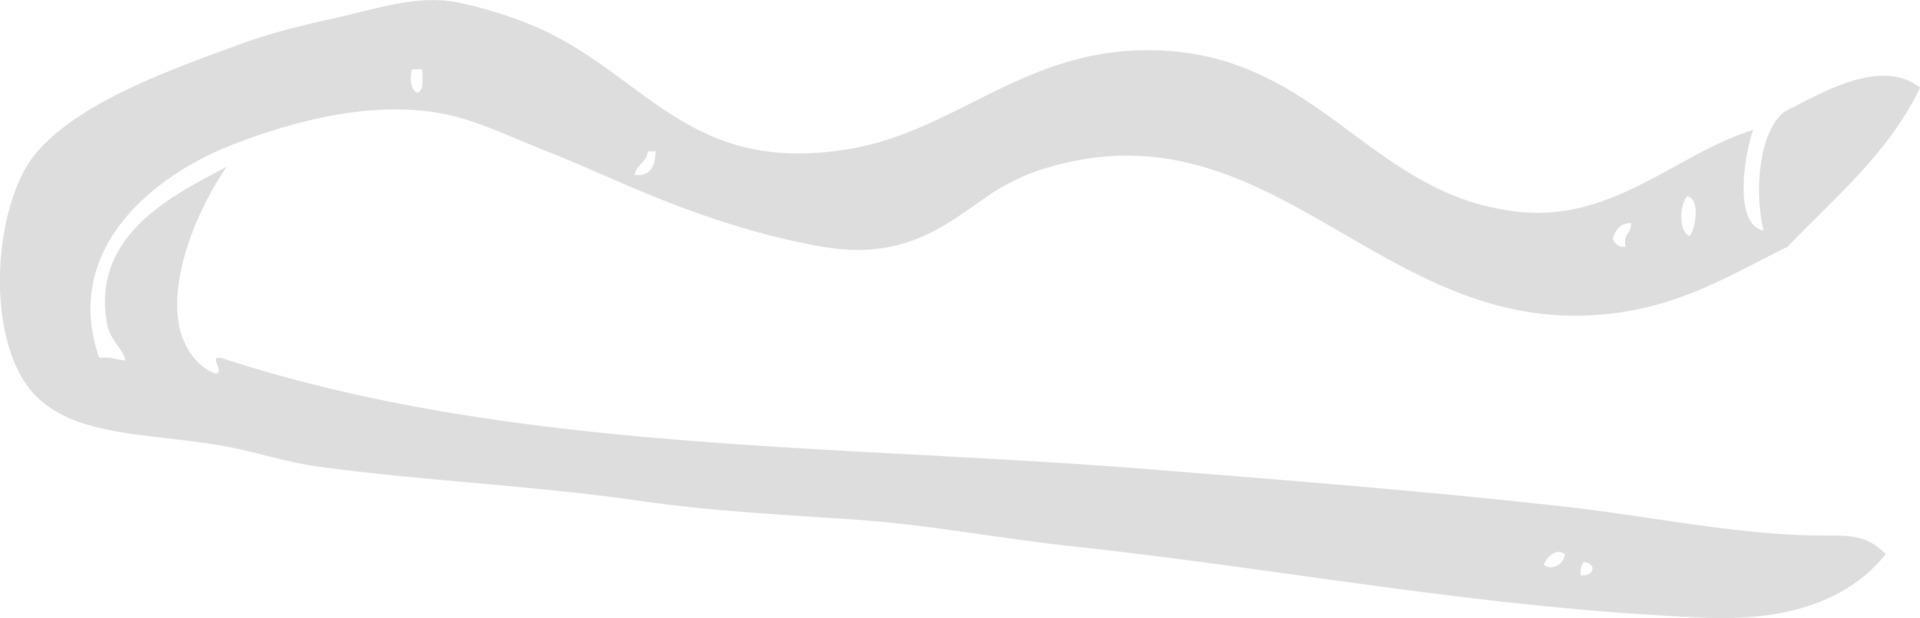 flat color illustration of a cartoon hair clip vector